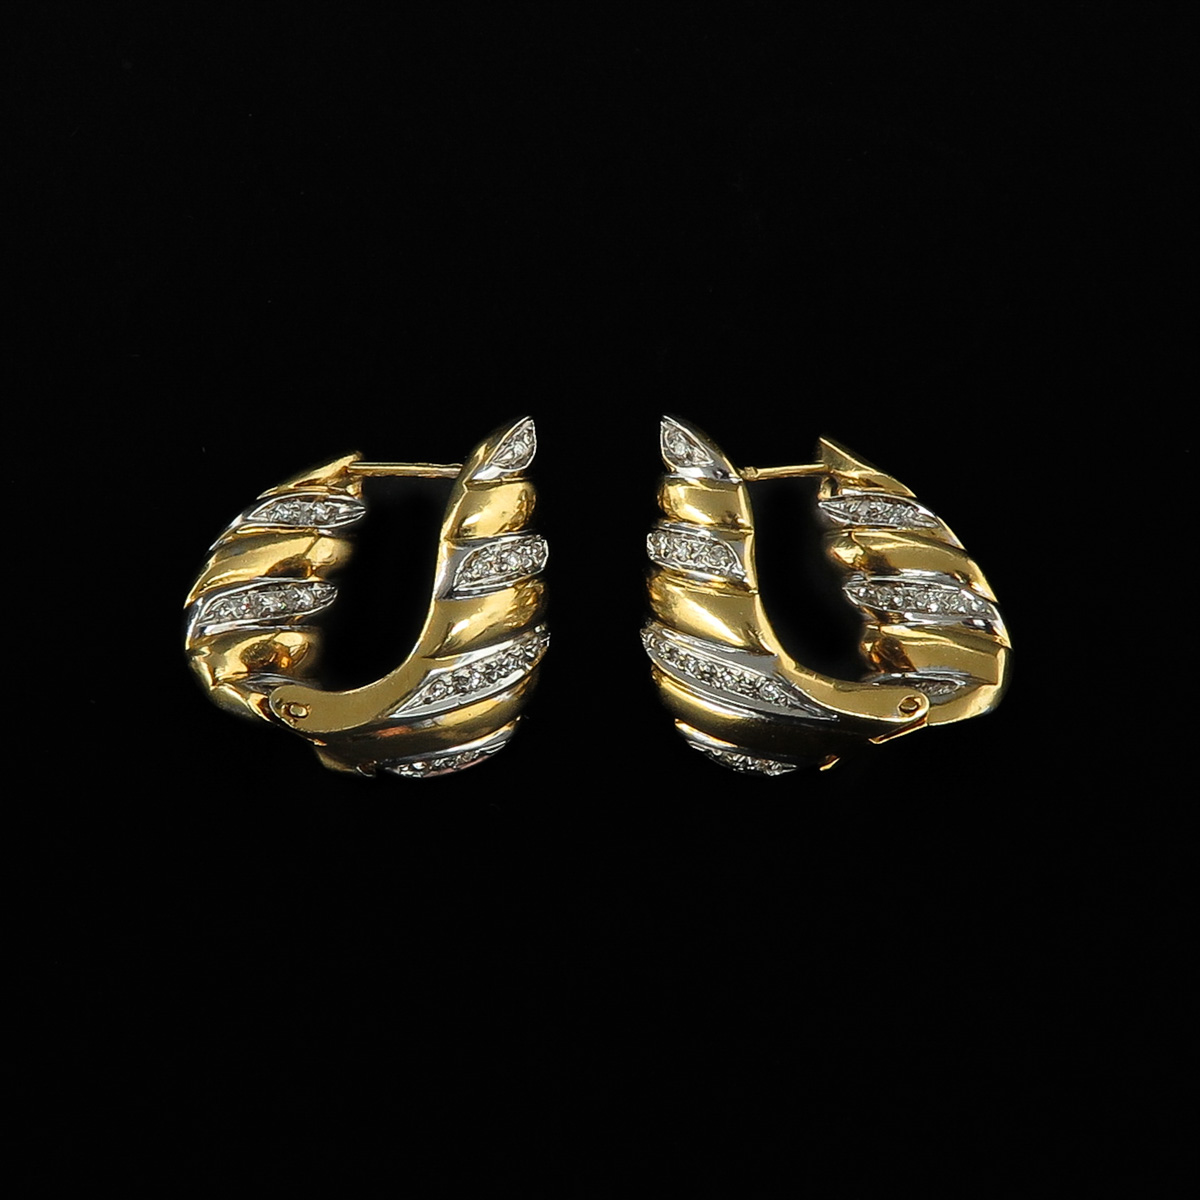 A Diamond Bracelet and Earrings - Image 4 of 6